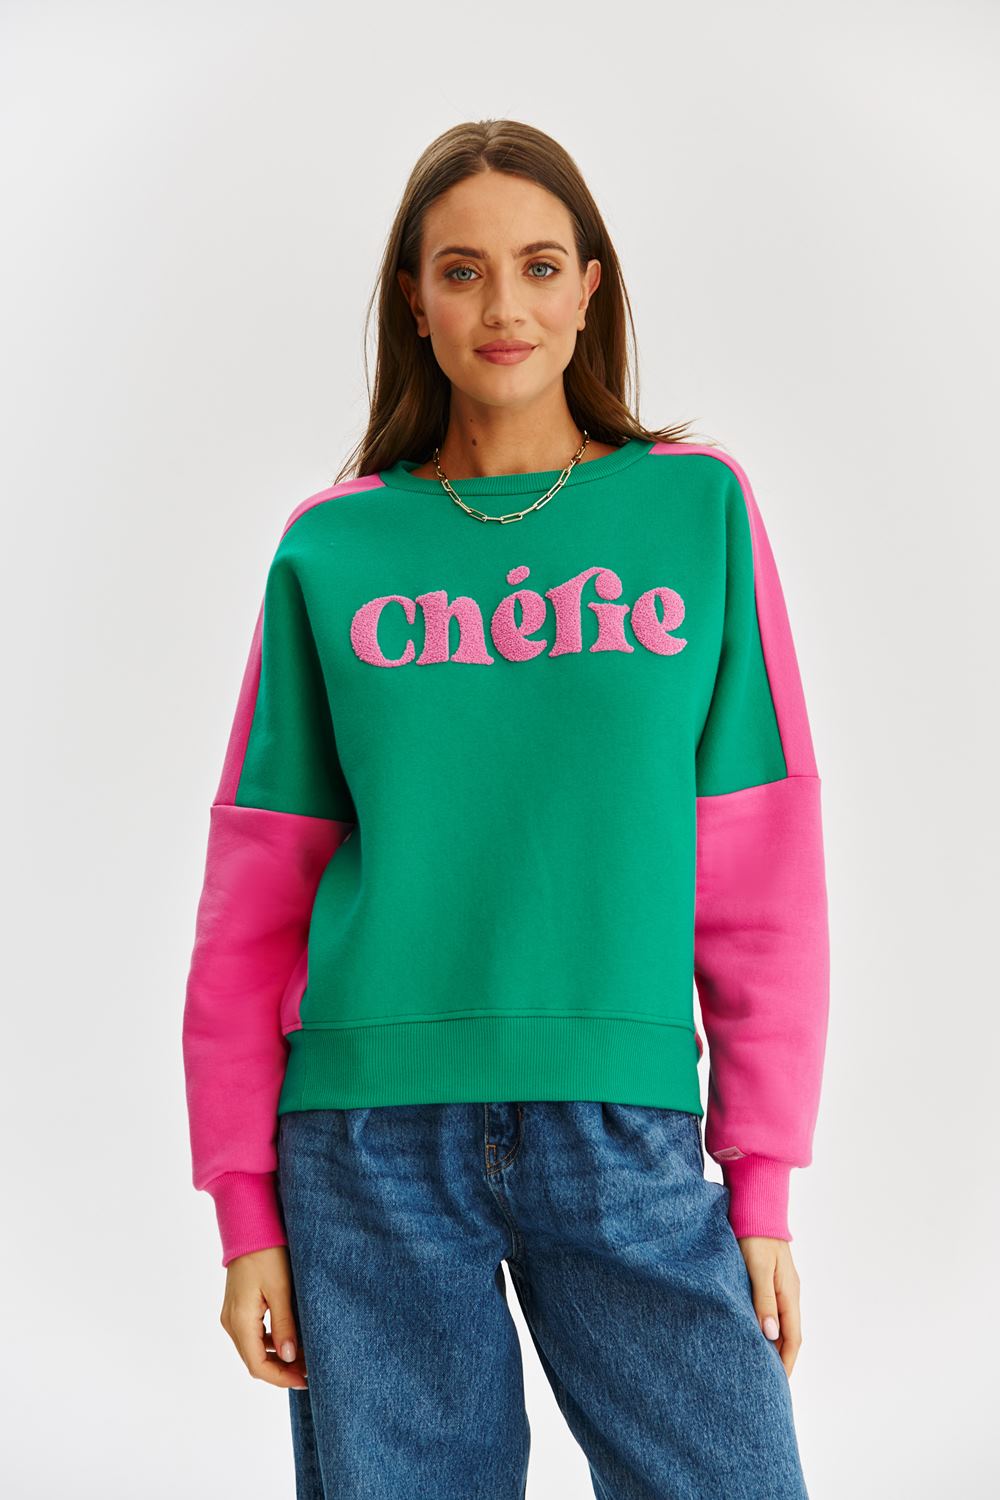 Cherie sweatshirt